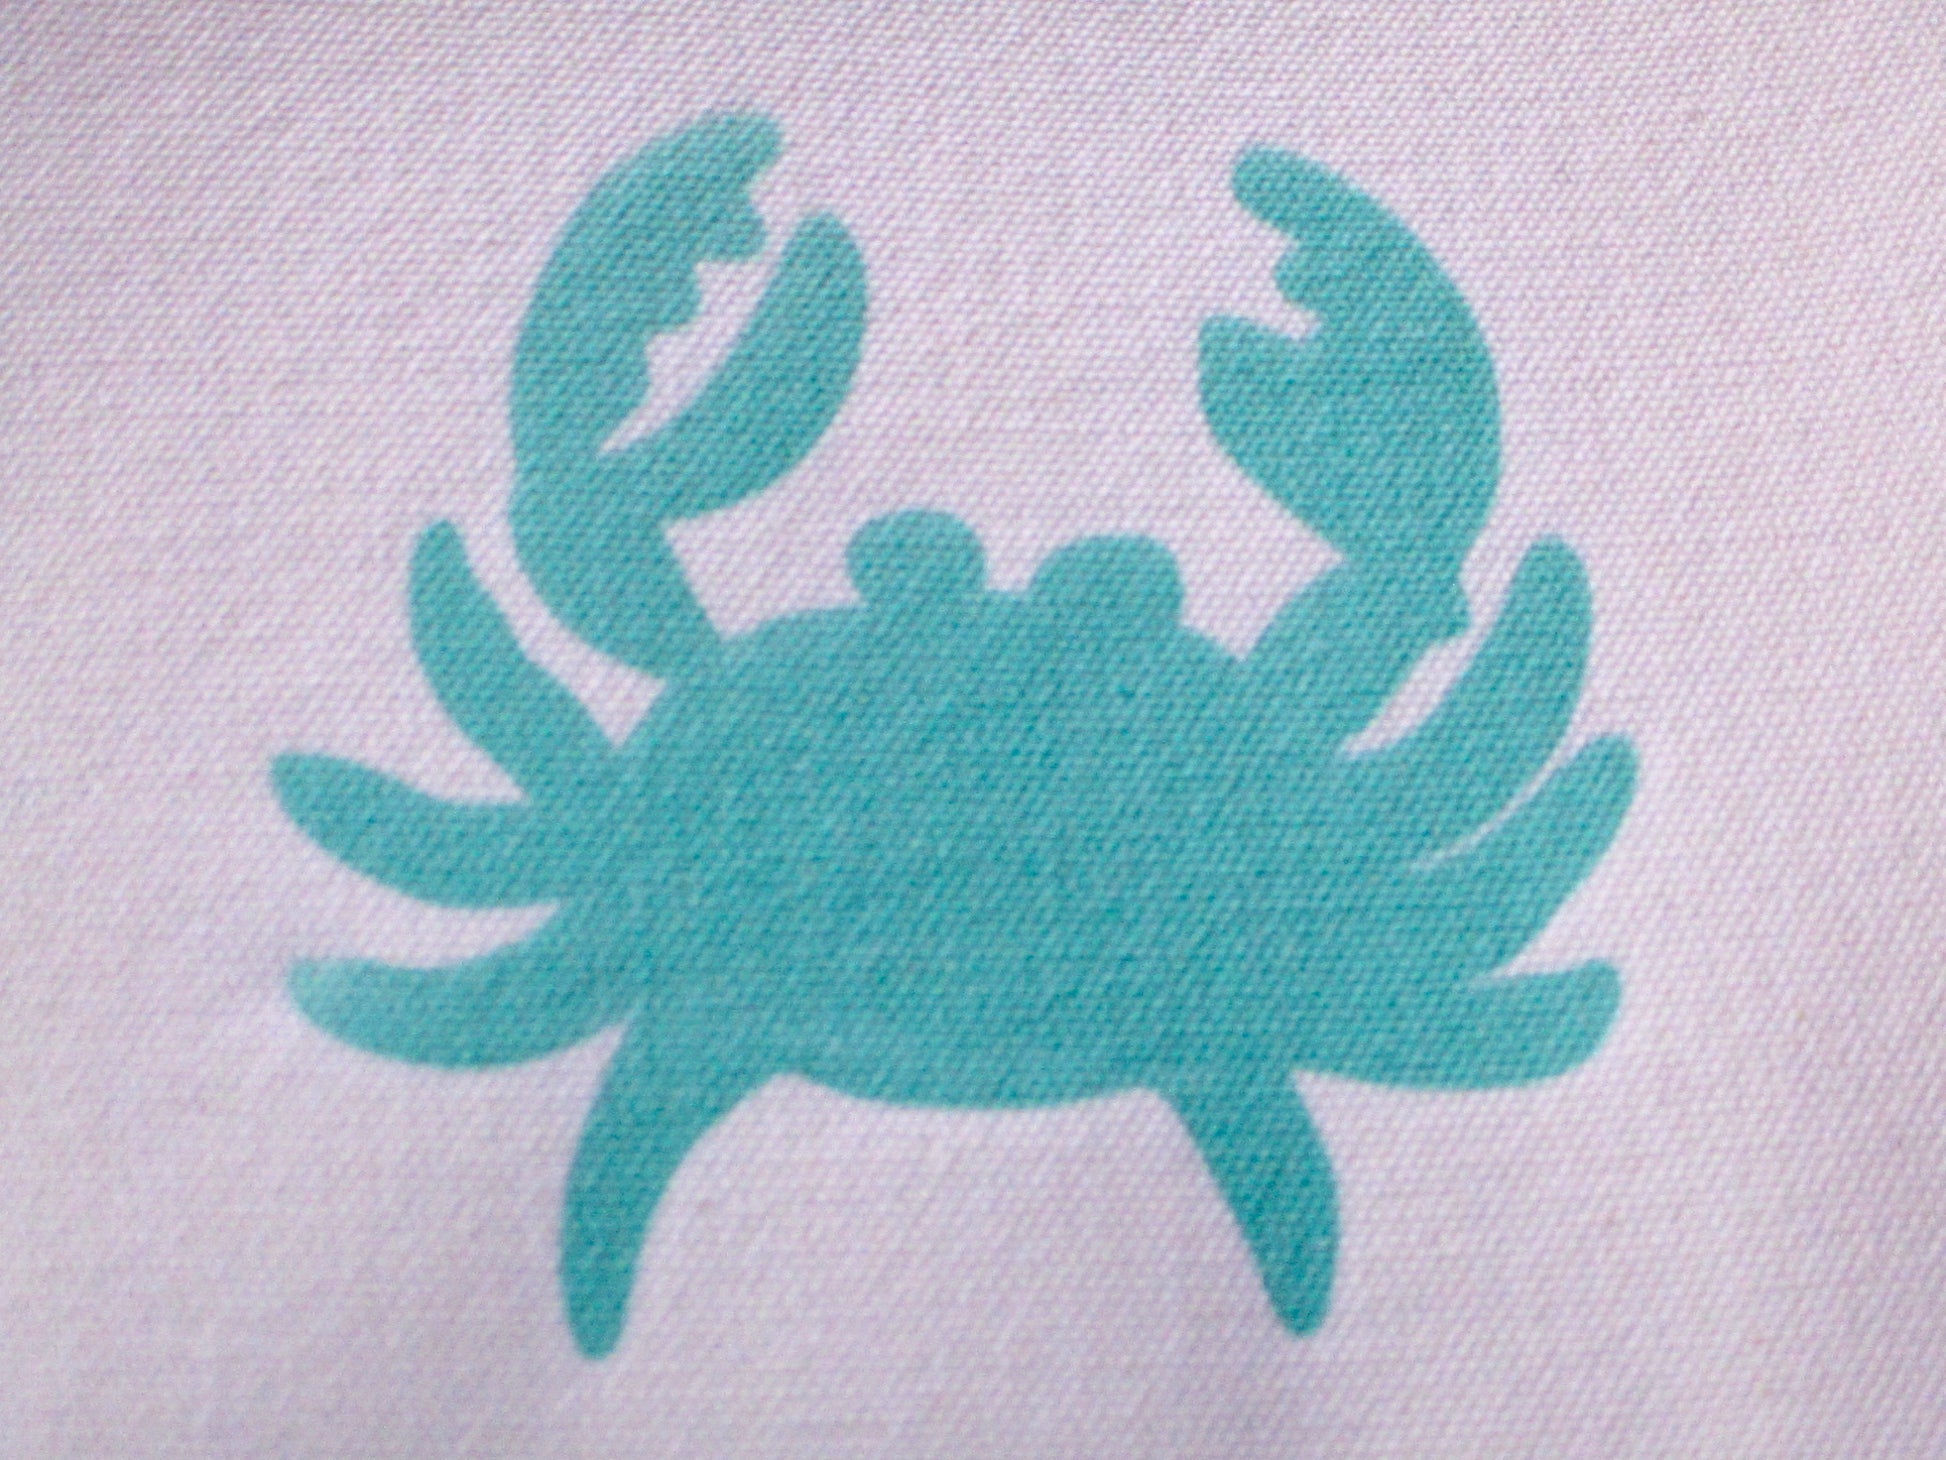 Canvas Zipper Pouch -  Teal Crab - Beachside Quilts